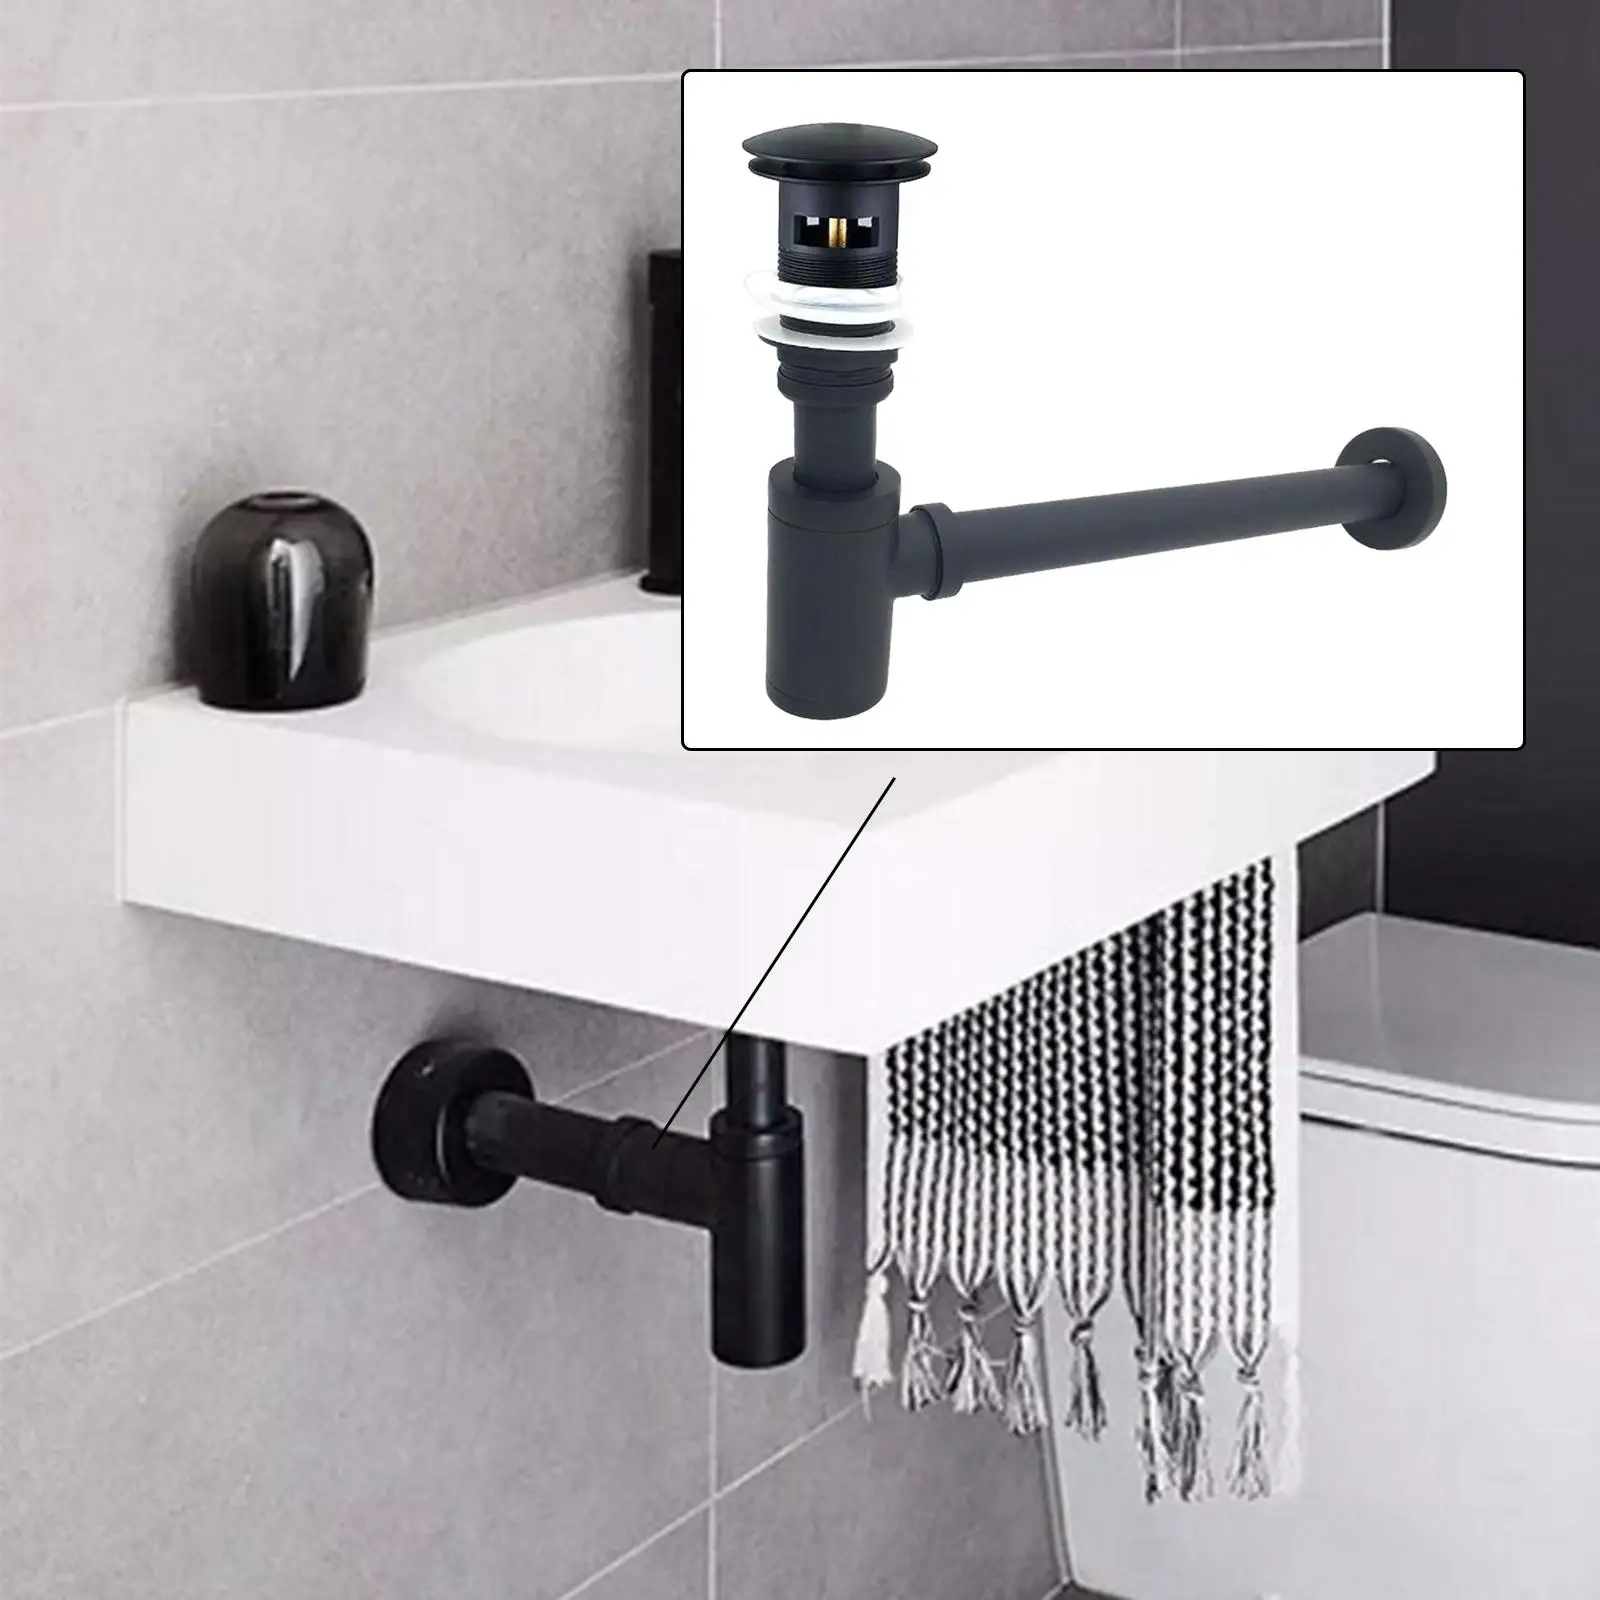 Brass Basin Sink Waste Traps Drain Anti Odor No Leakage Anti Blocking Under Sink Drainage Plumbing Tube Modern for Kitchen